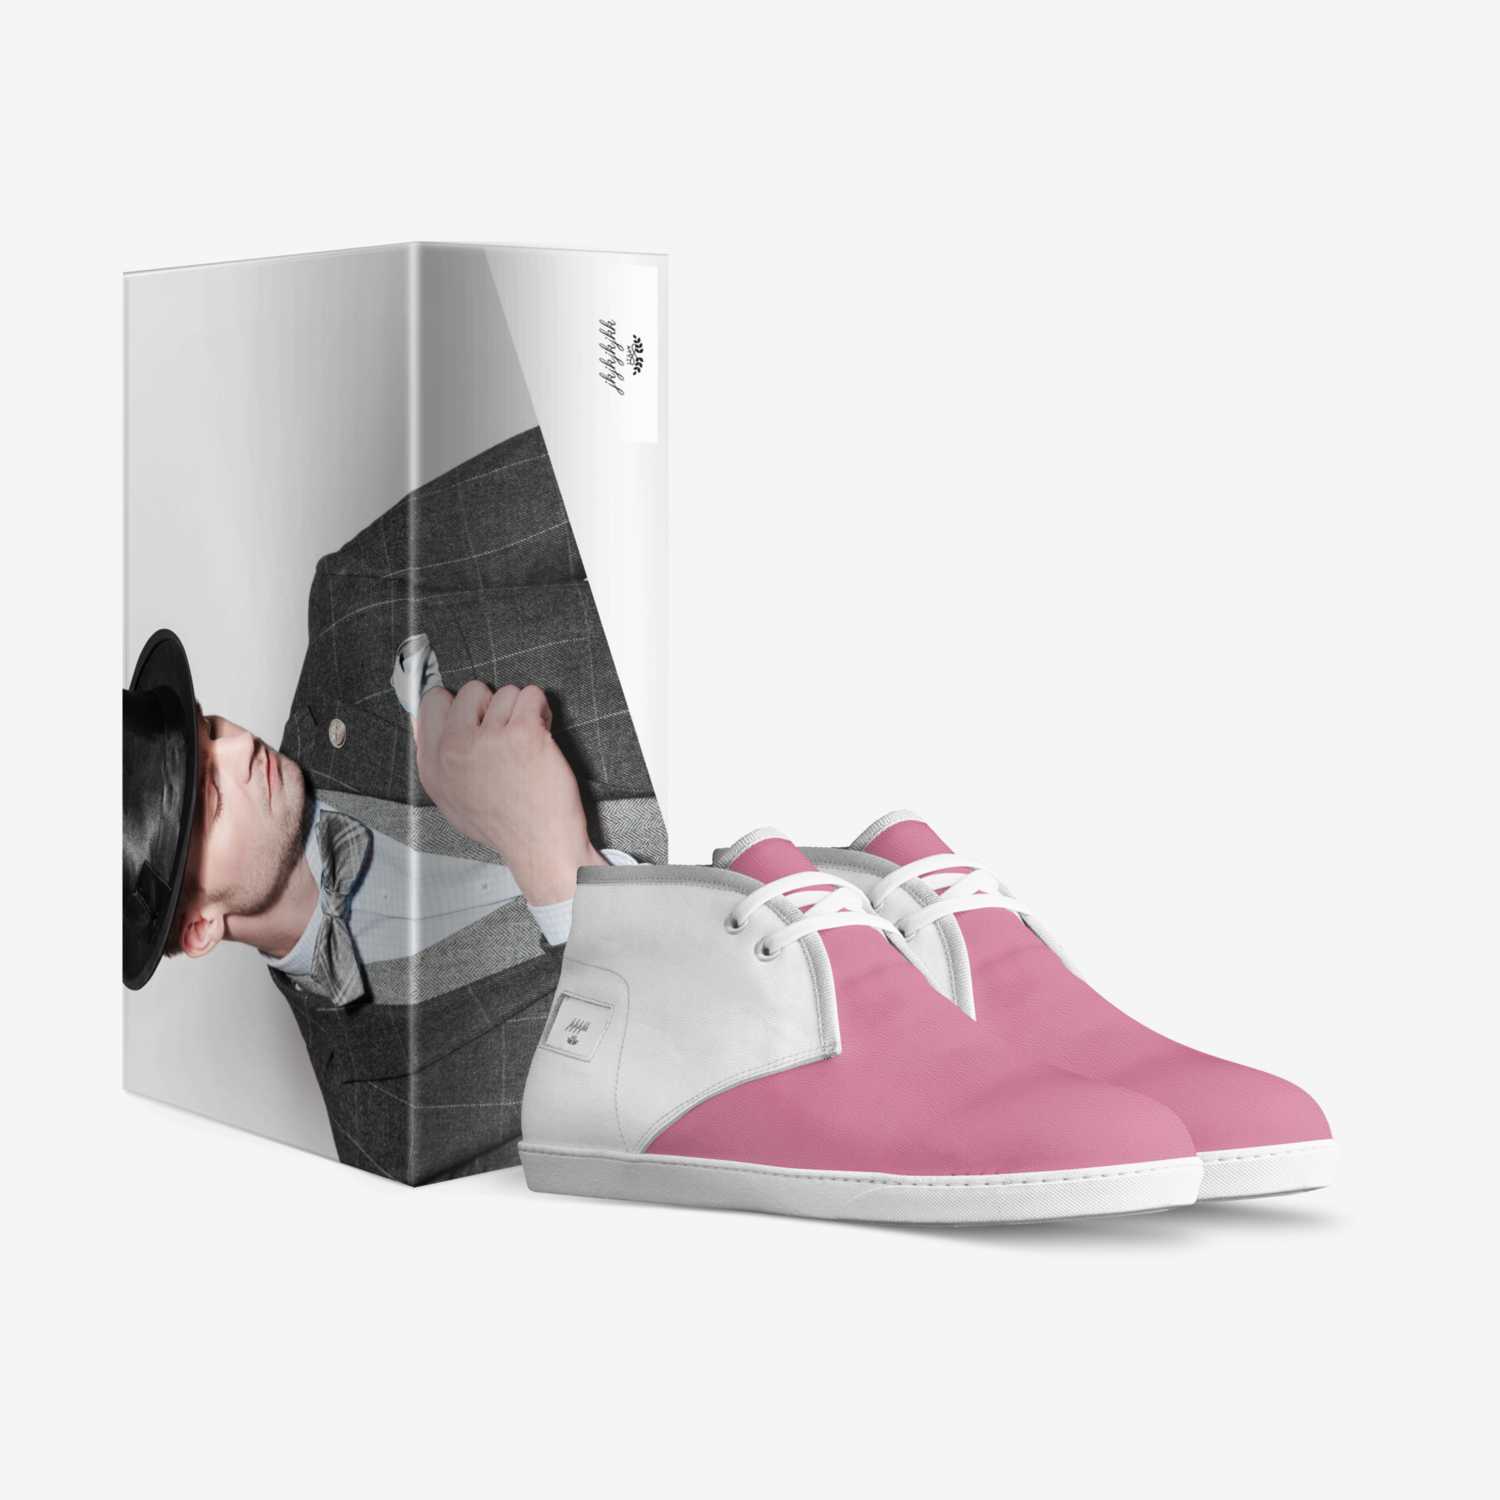 jkjkjkjkk custom made in Italy shoes by Luca Sas | Box view